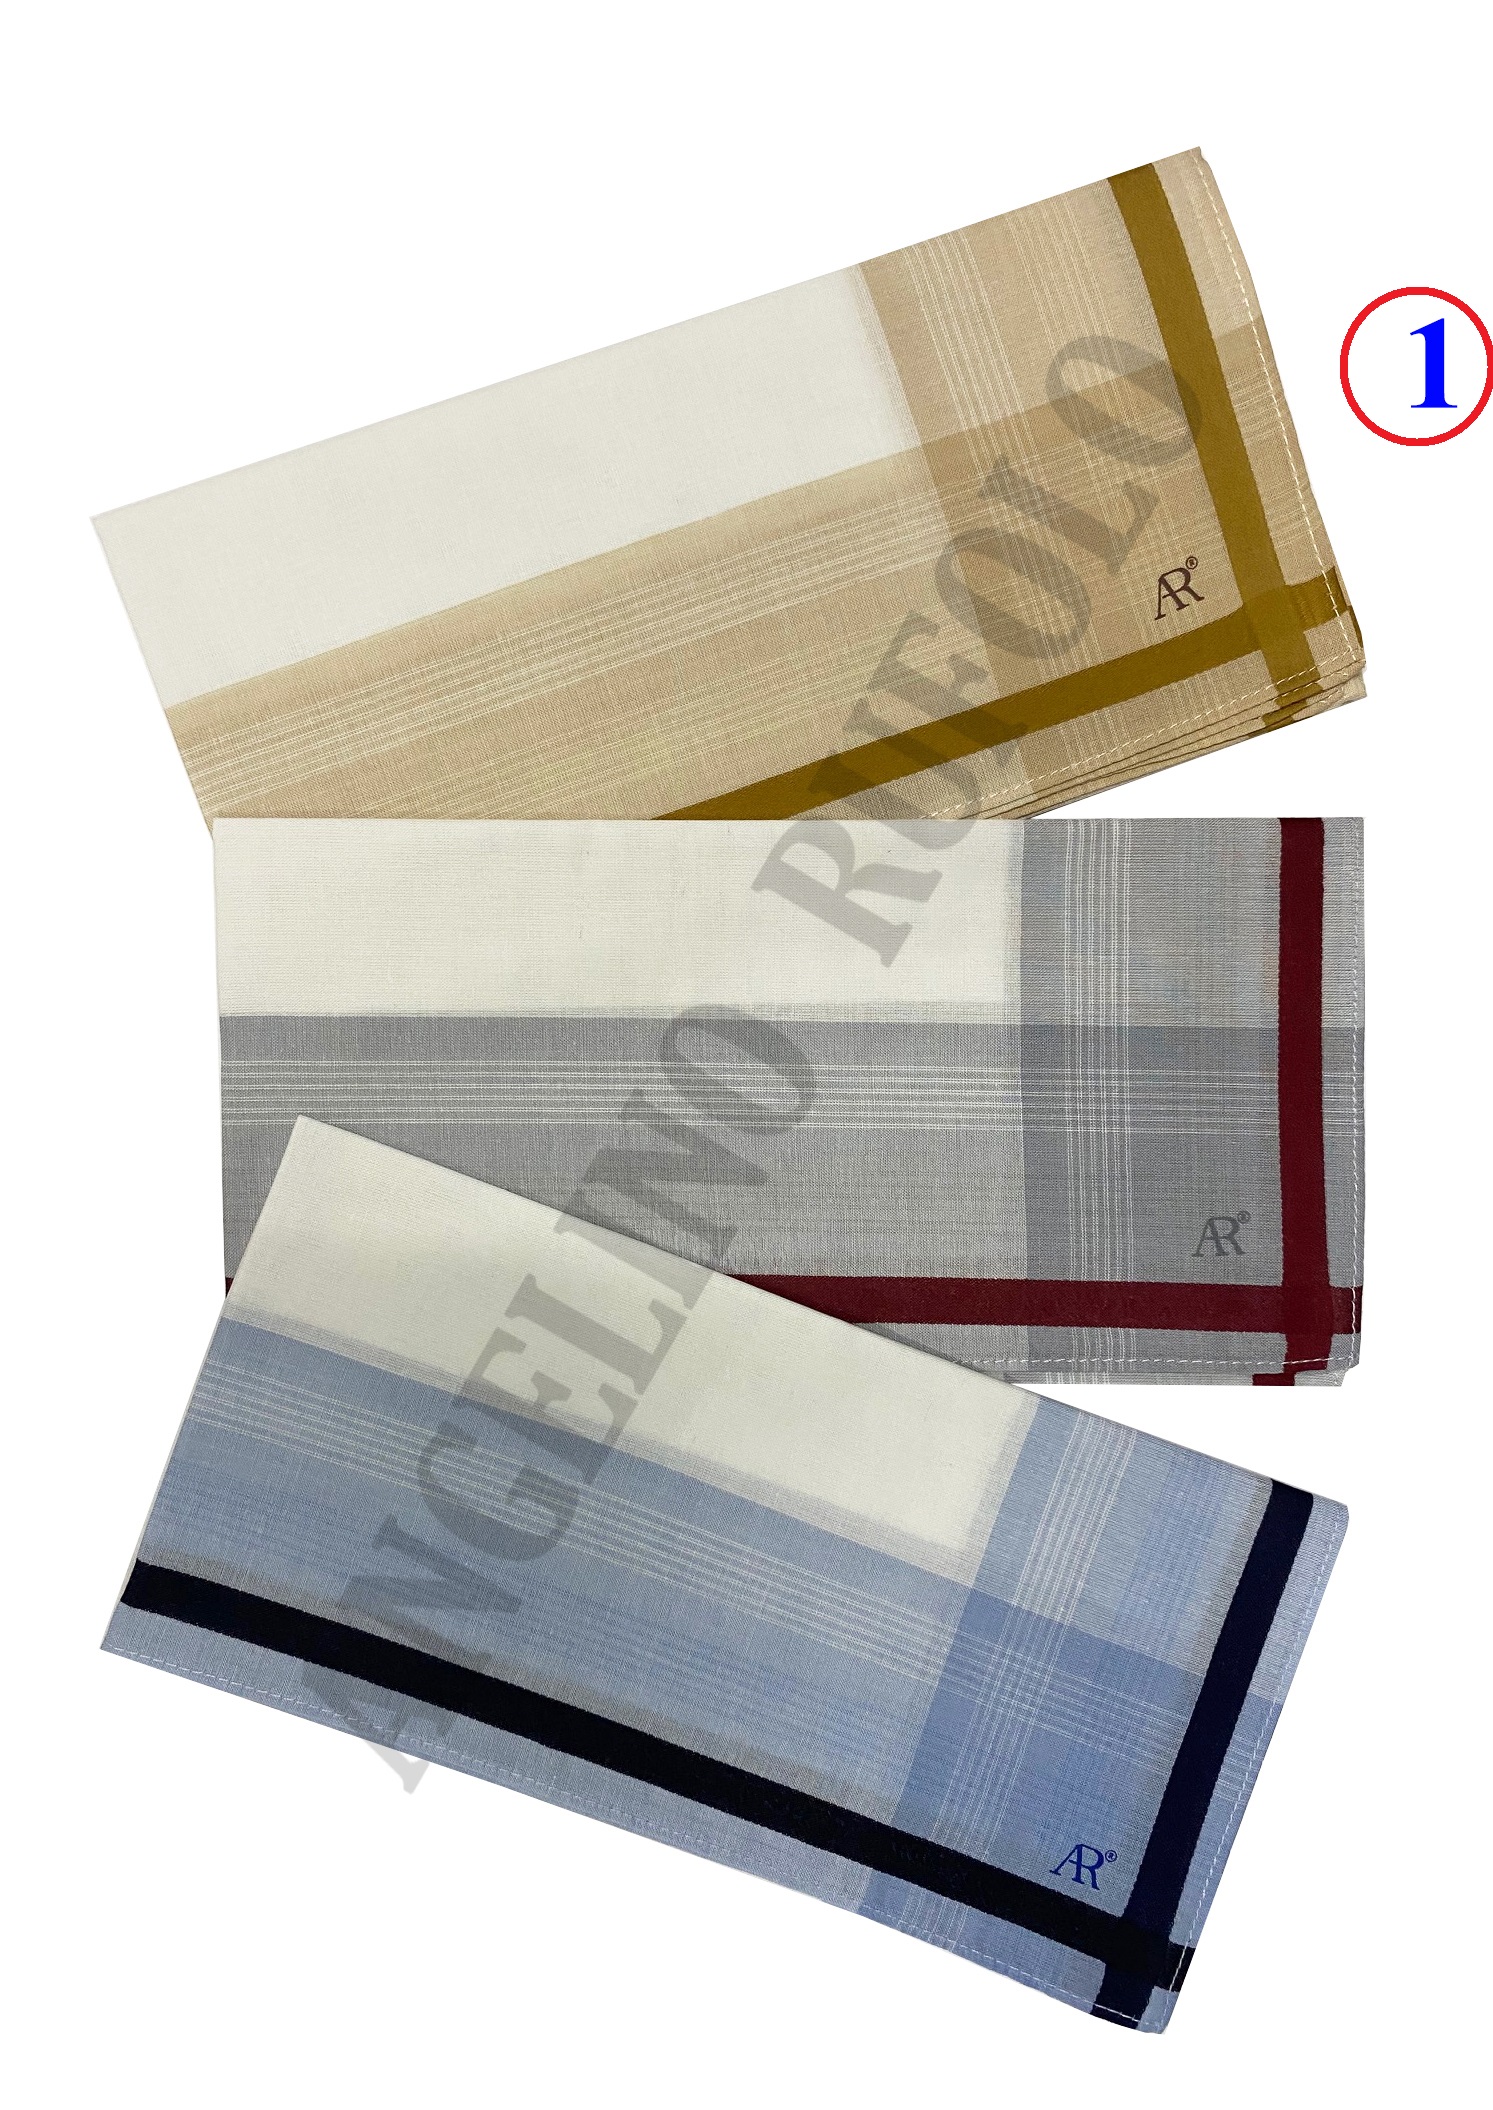 ANGELINO RUFOLO Handkerchief (ผ้าเช็ดหน้า) ผ้า 100% COTTON คุณภาพเยี่ยม ดีไซน์ Classic สีขาว-เบจ/สีขาว-เทา/สีขาว-ฟ้า